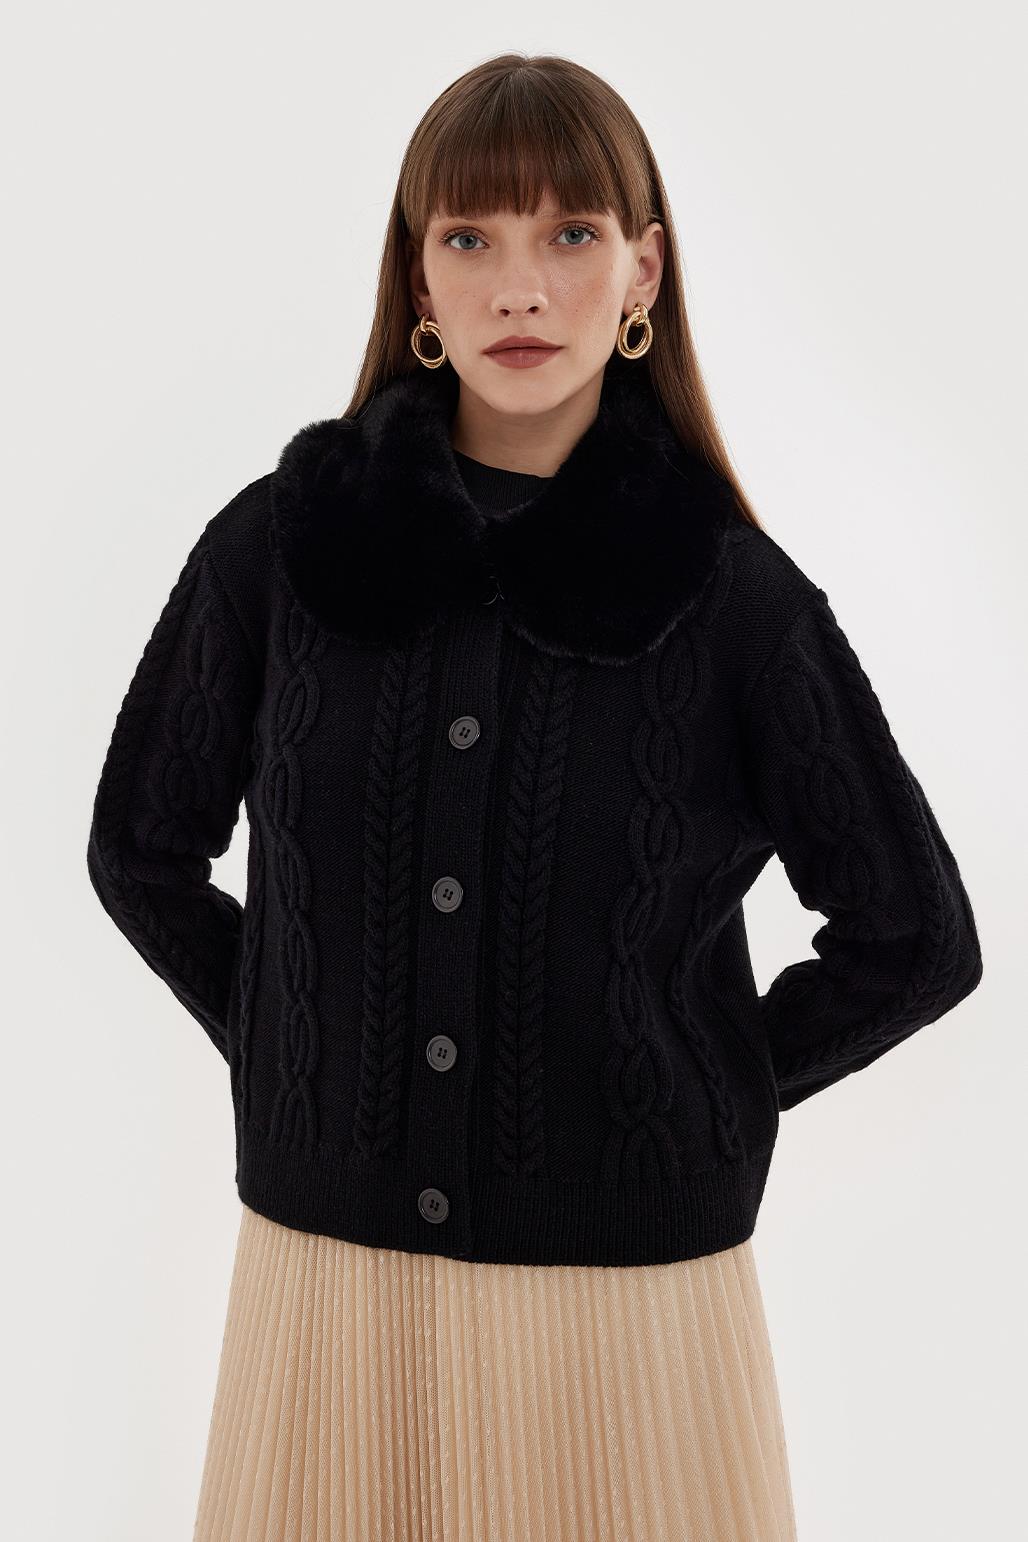 Fur Collar Knit Cardigan Black